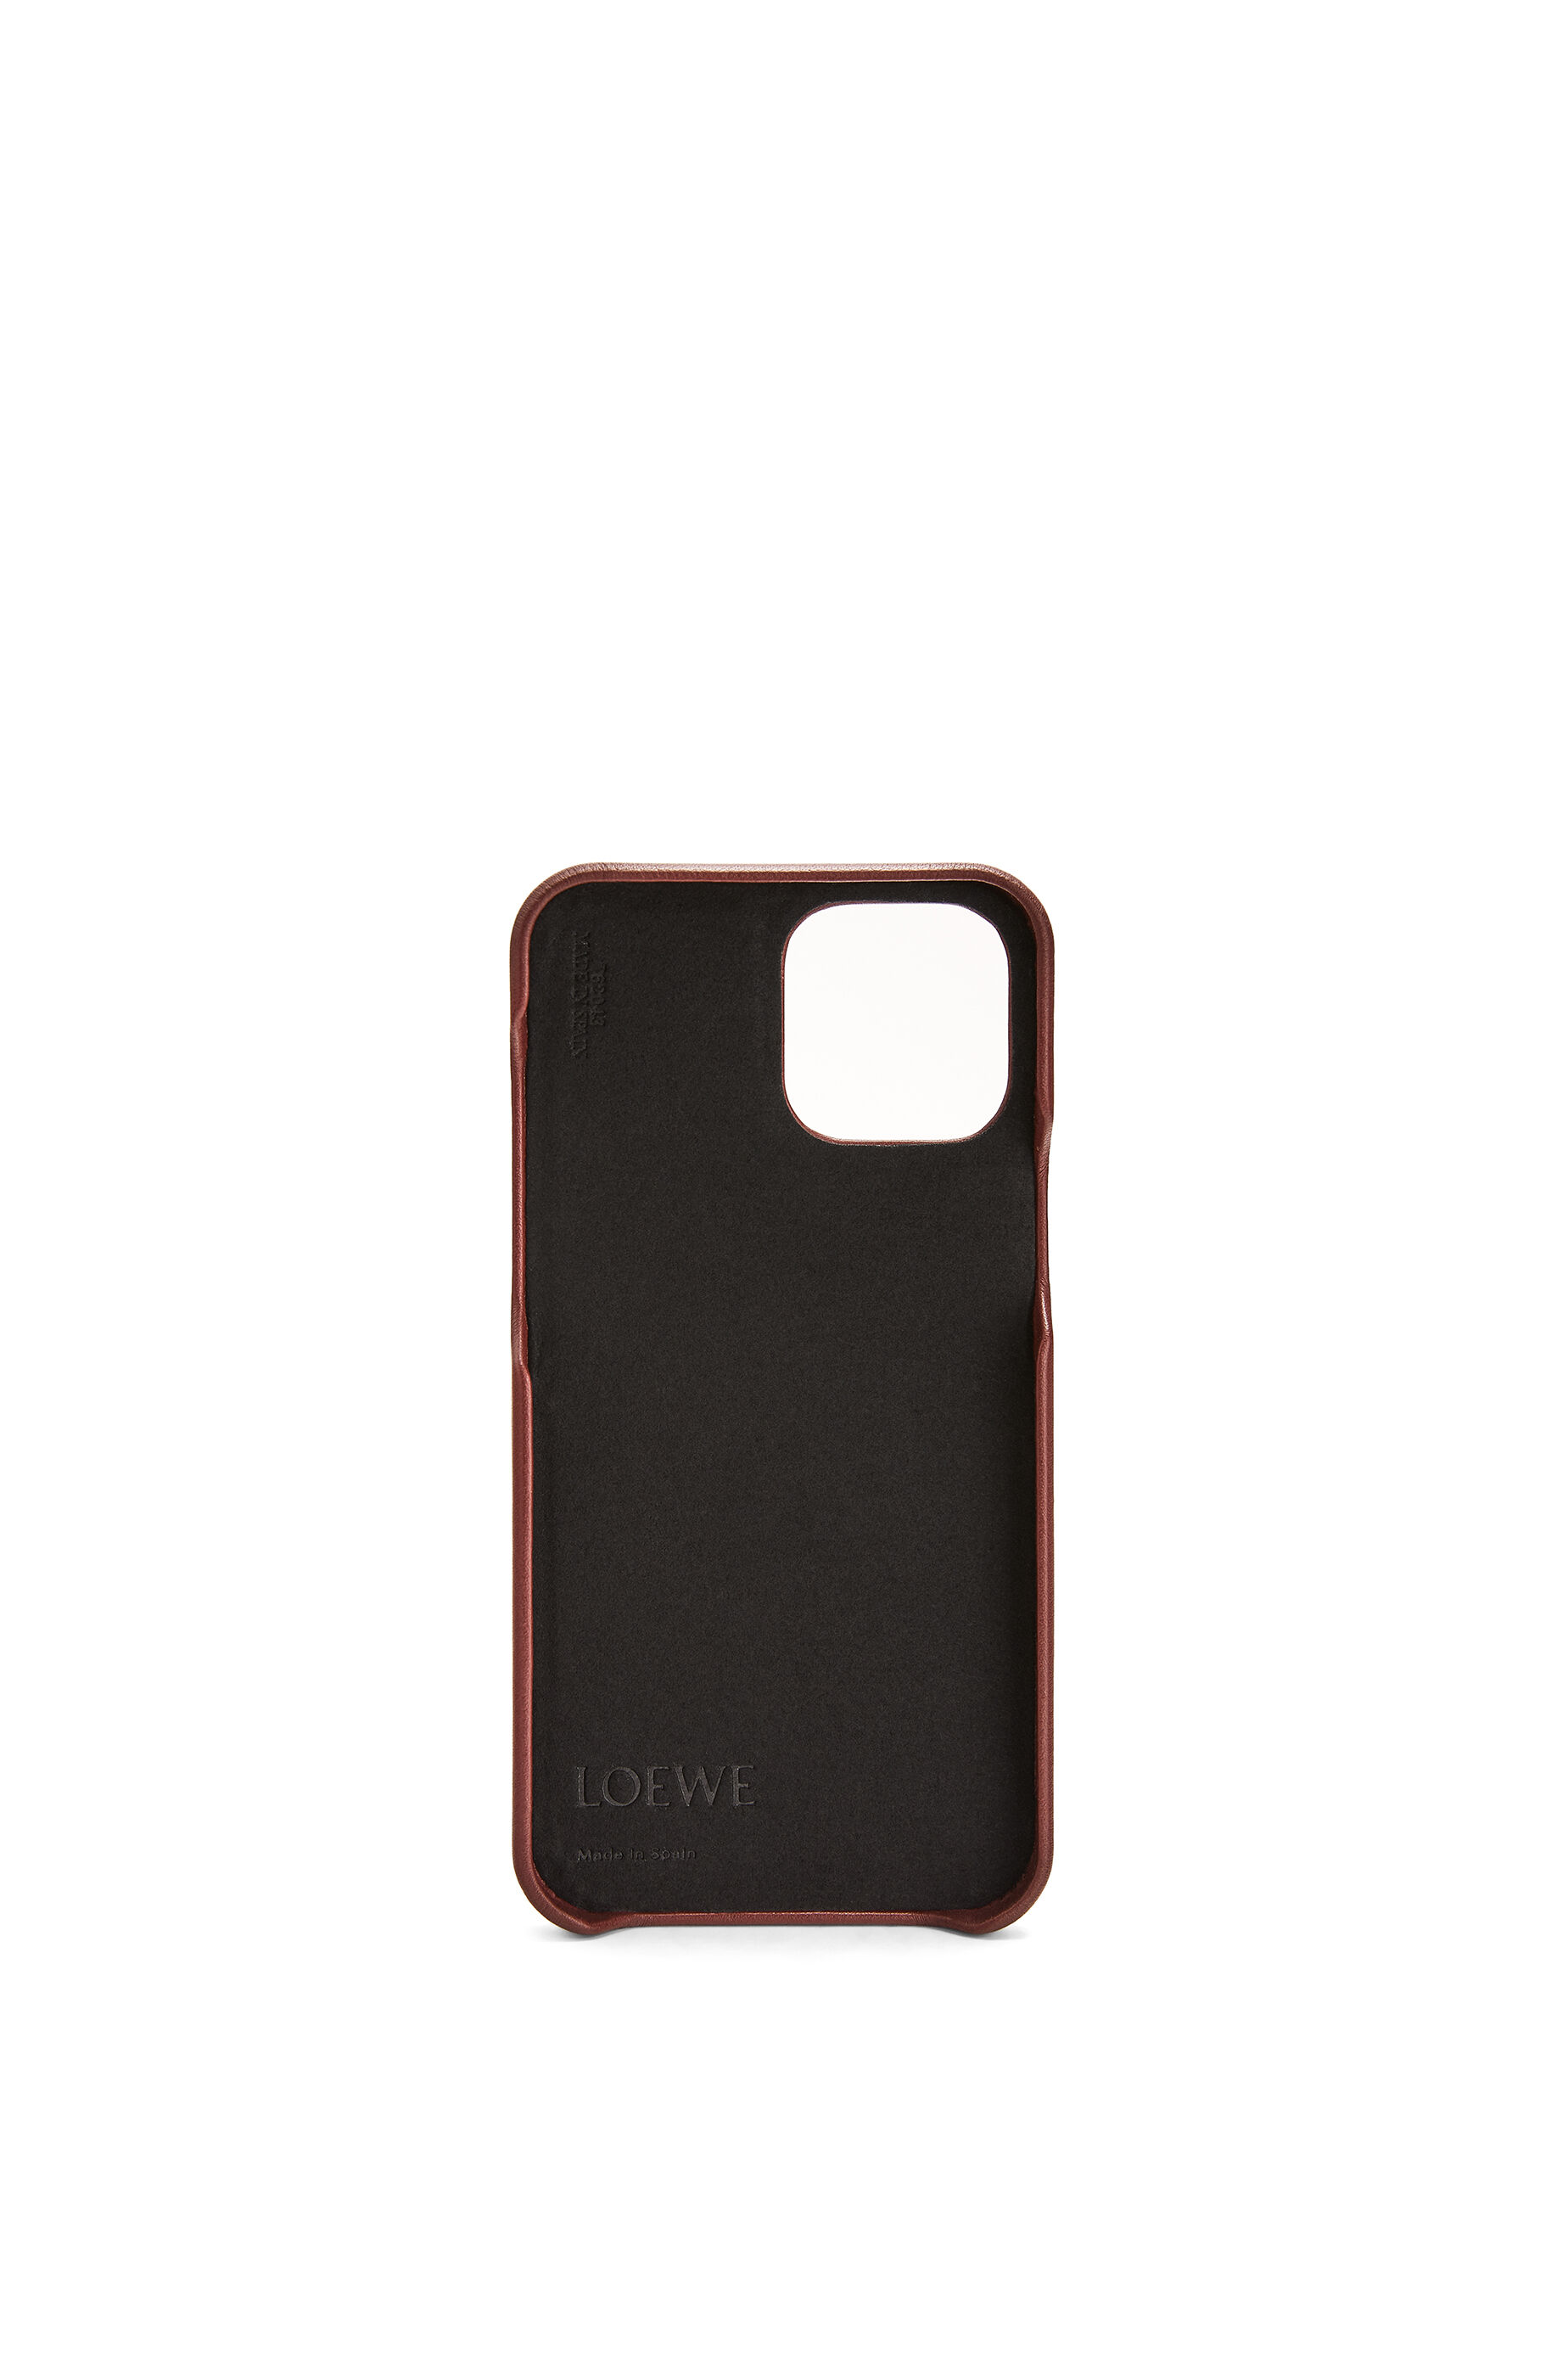 iPhone 12 Pro Max用 ブランド カバー (カーフ) berry - LOEWE